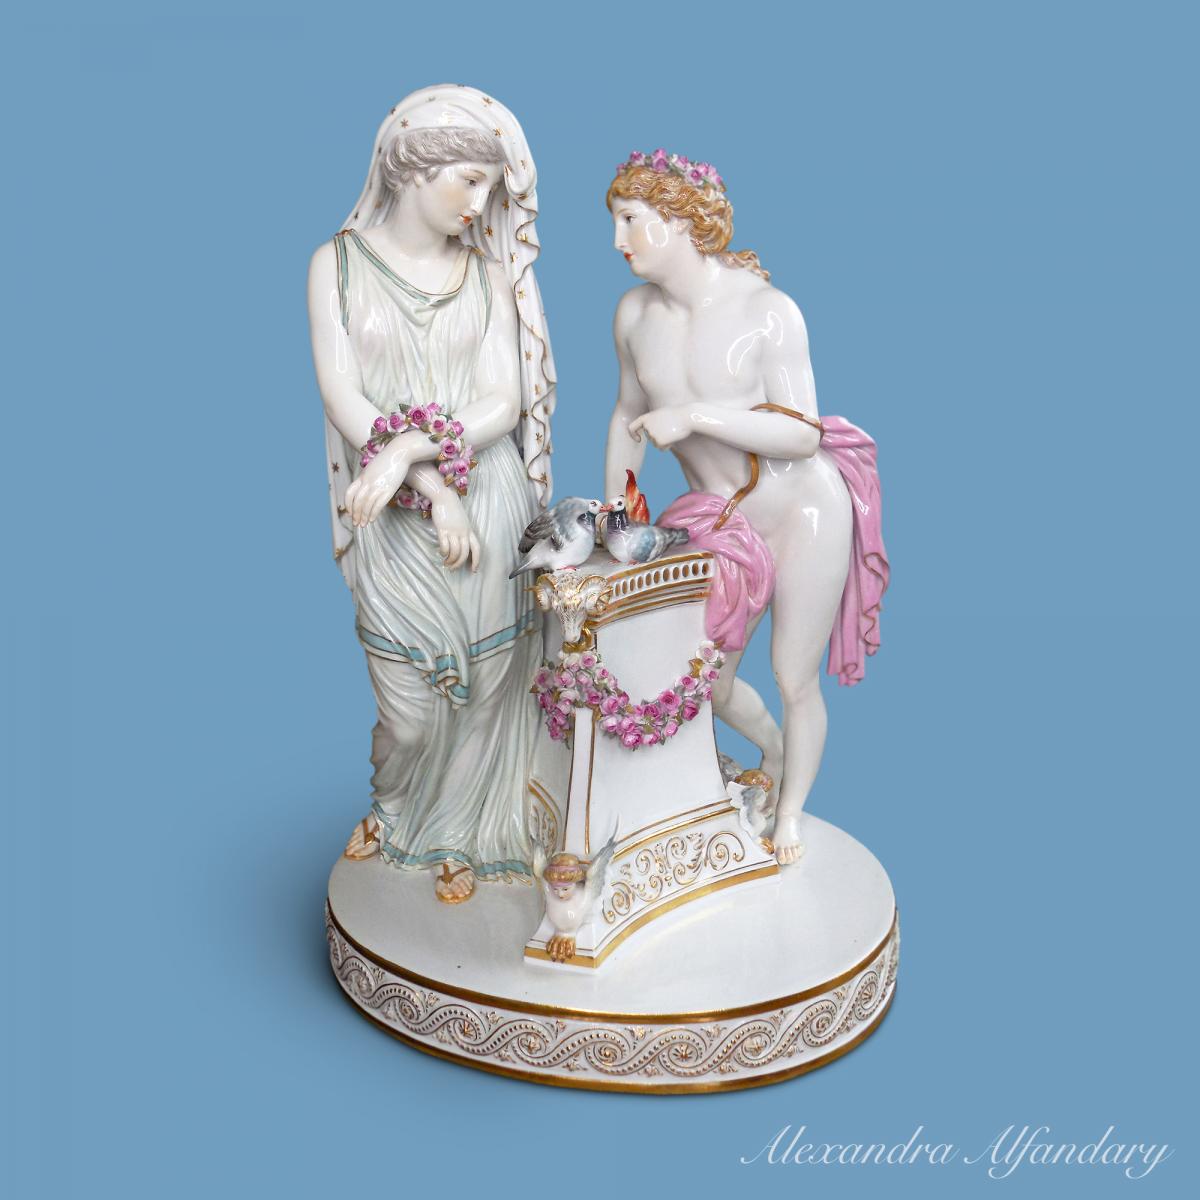 A Large Decorative Meissen Porcelain Group of “Love Captured” modeller Christian G. Juechtzer, circa 1880-1900